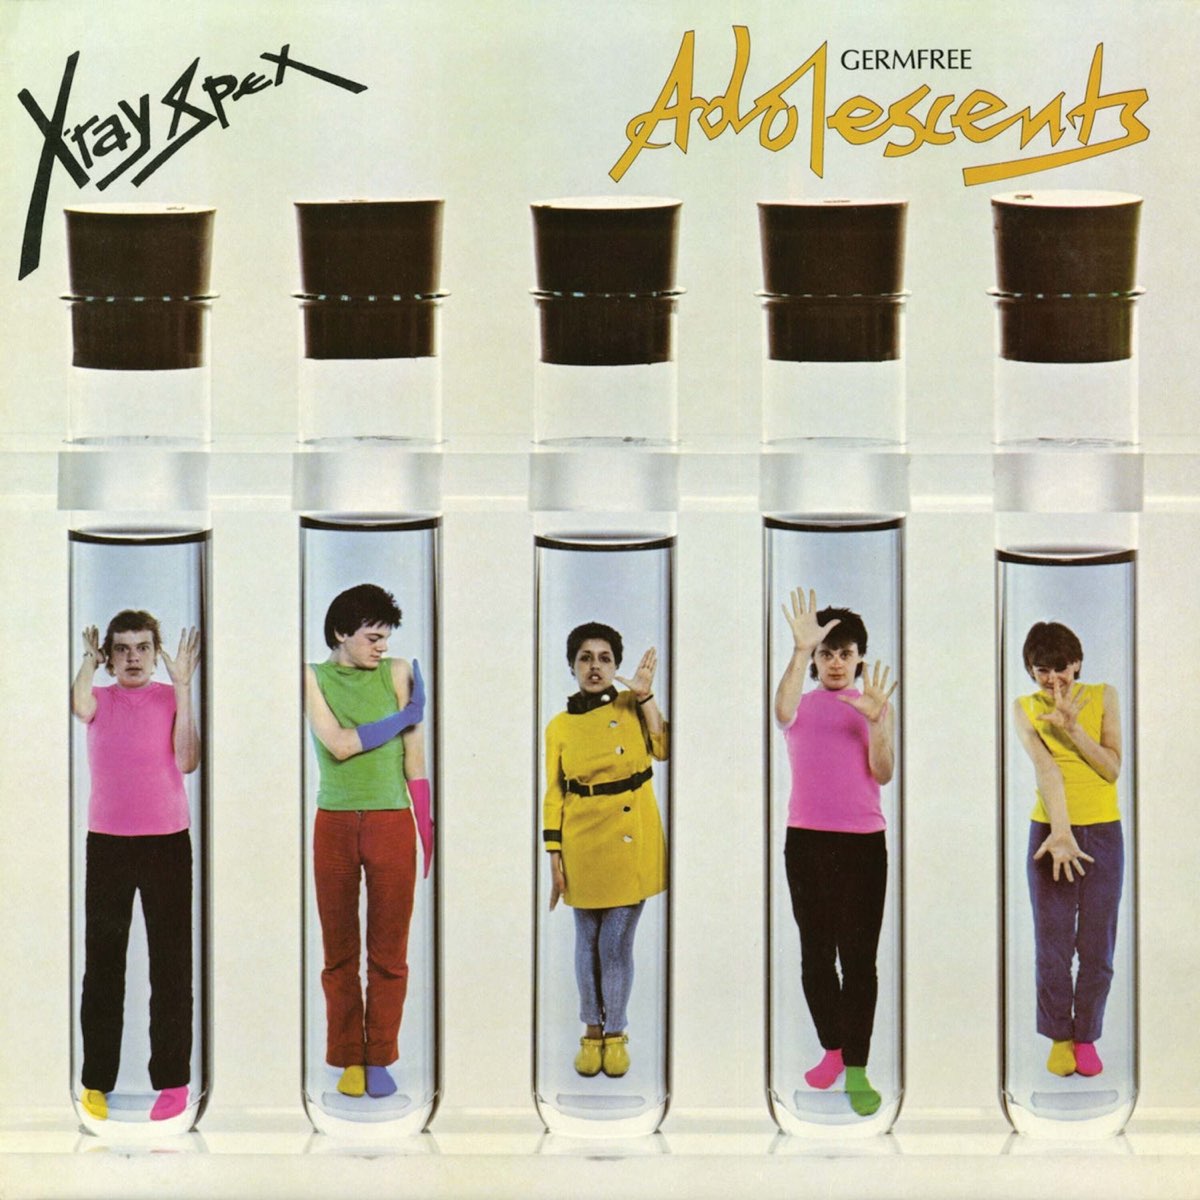 X-Ray Spex: Germfree Adolescents (Coloured Vinyl LP)